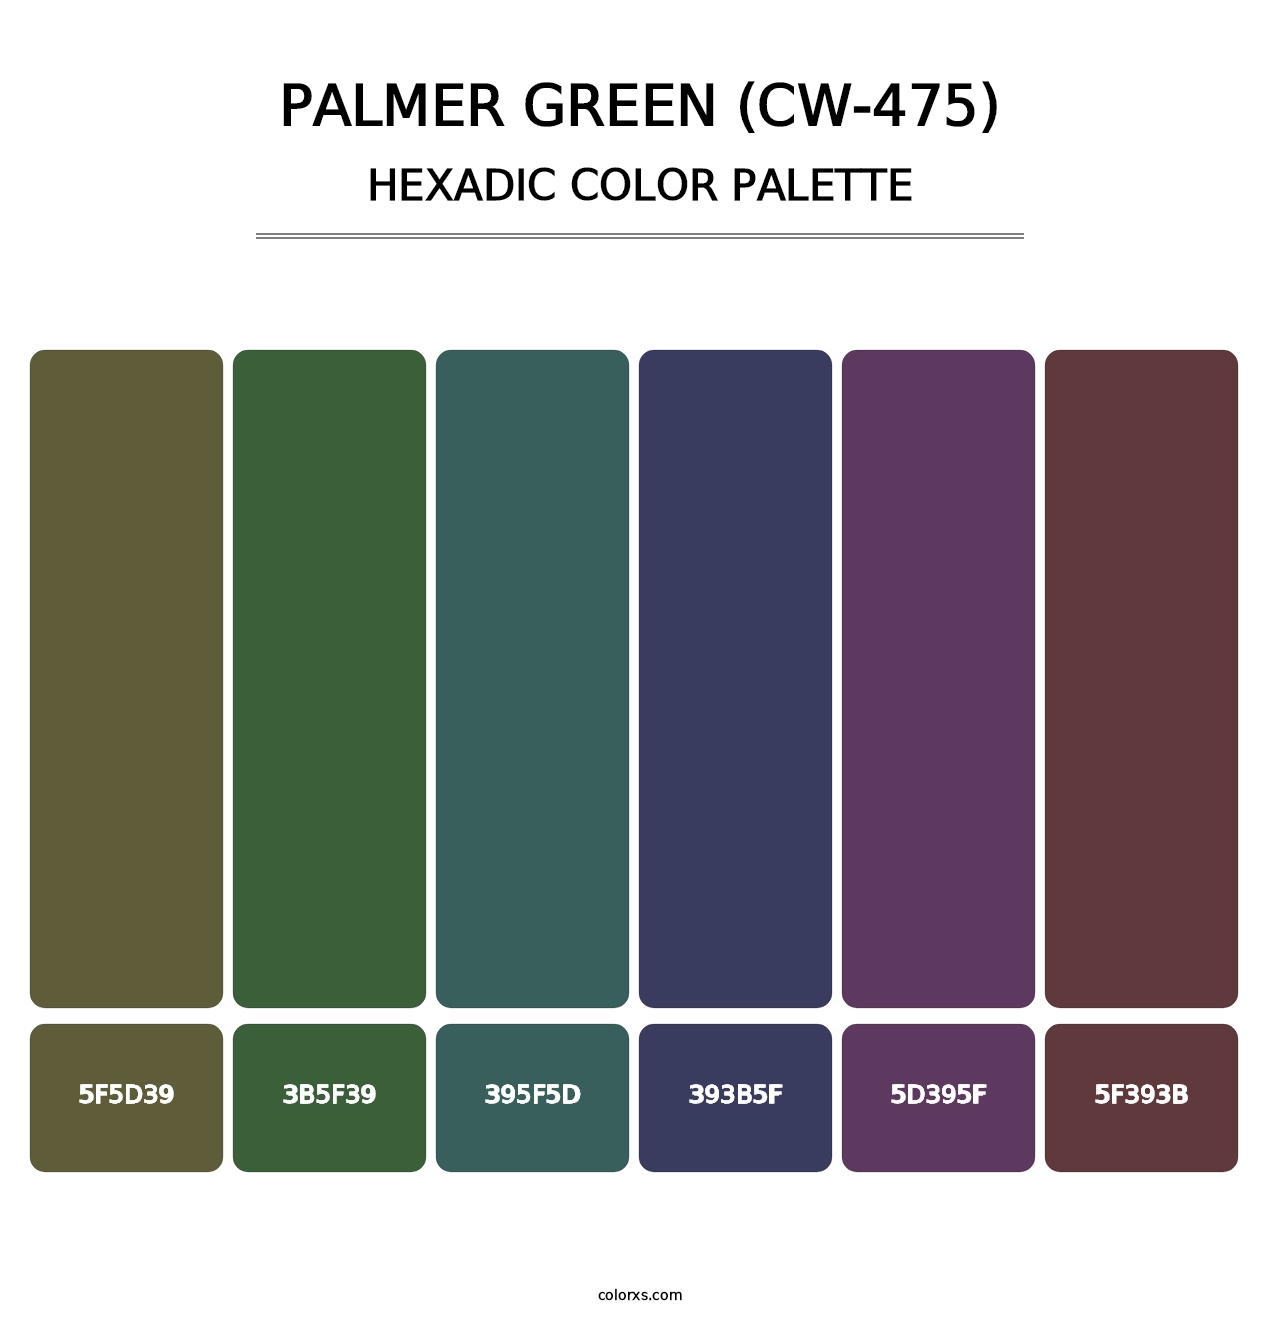 Palmer Green (CW-475) - Hexadic Color Palette